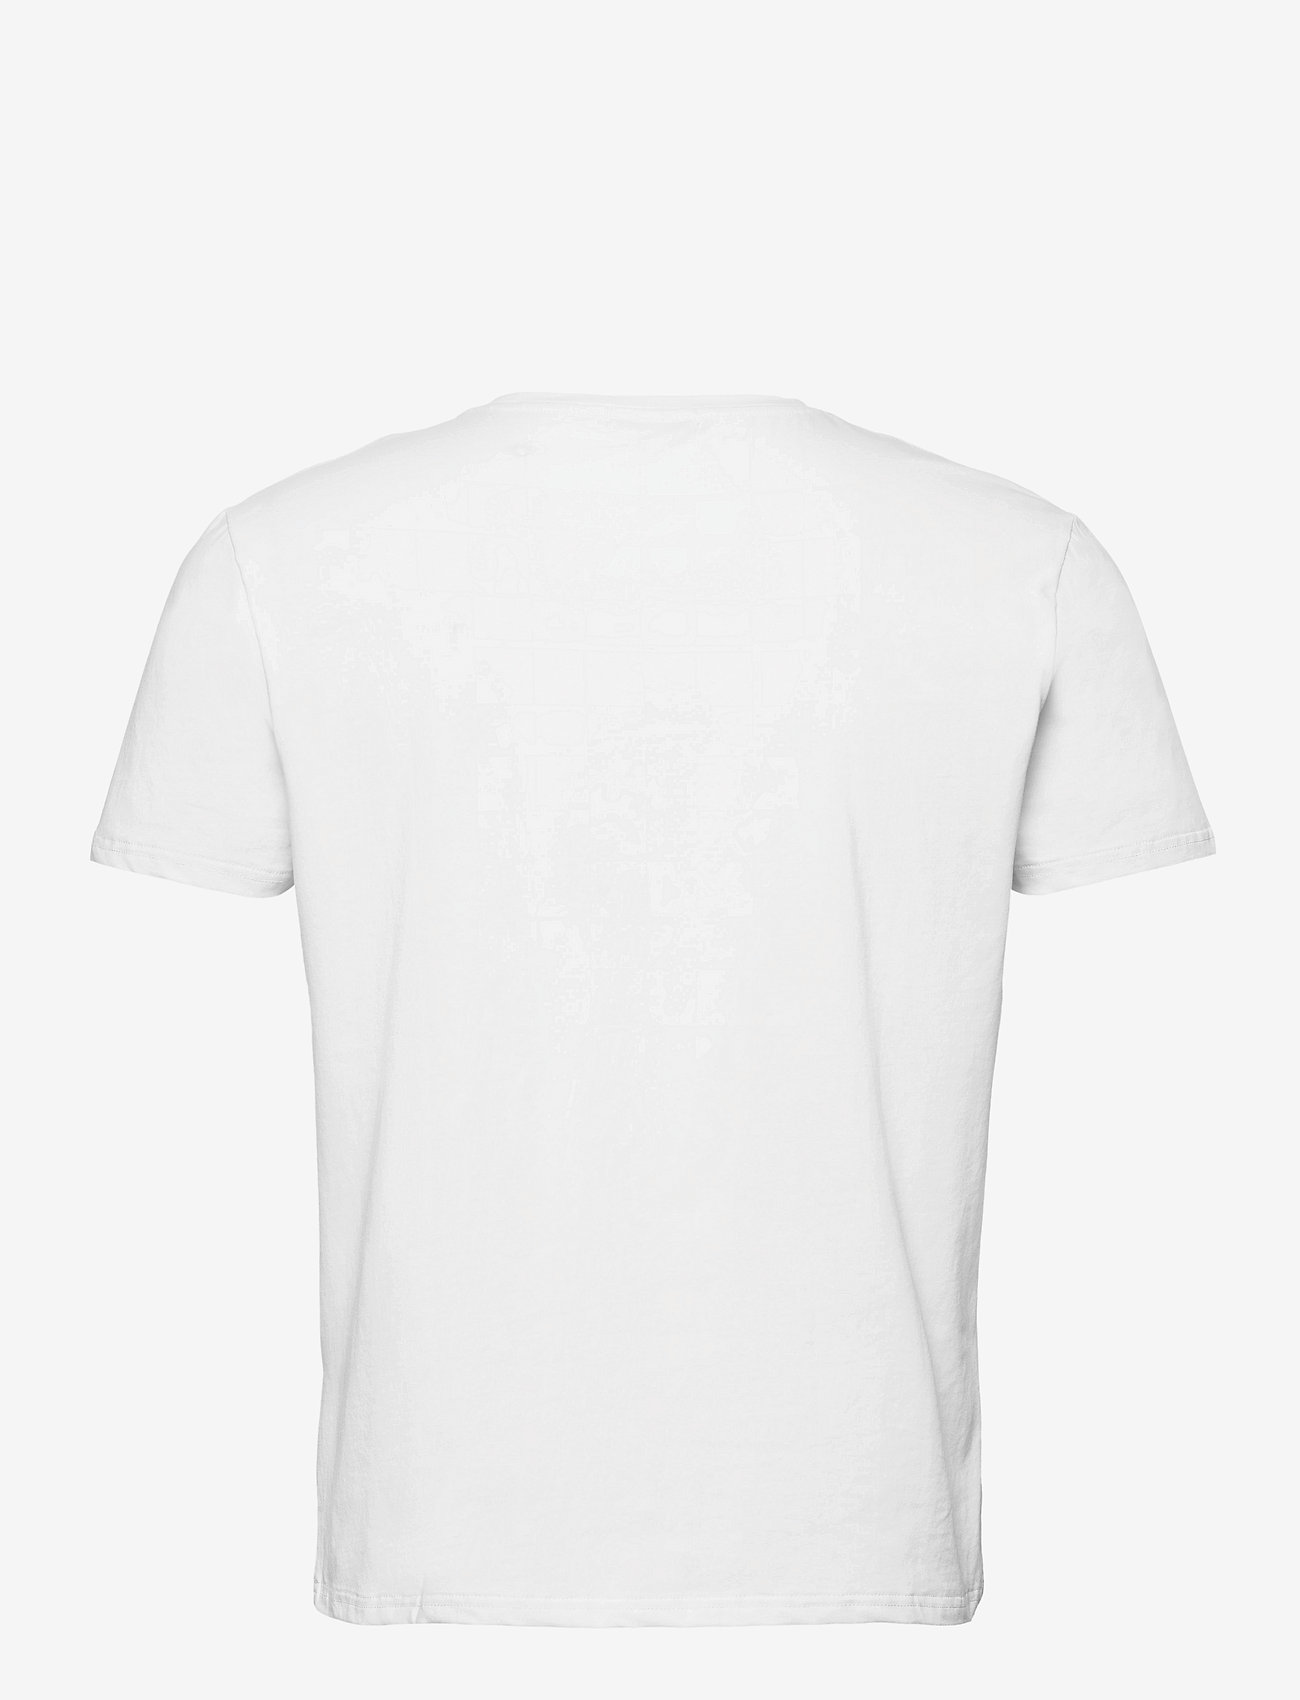 Panos Emporio - PANOS EMPORIO ORGANIC COTTON TEE CREW - t-shirts - white - 1